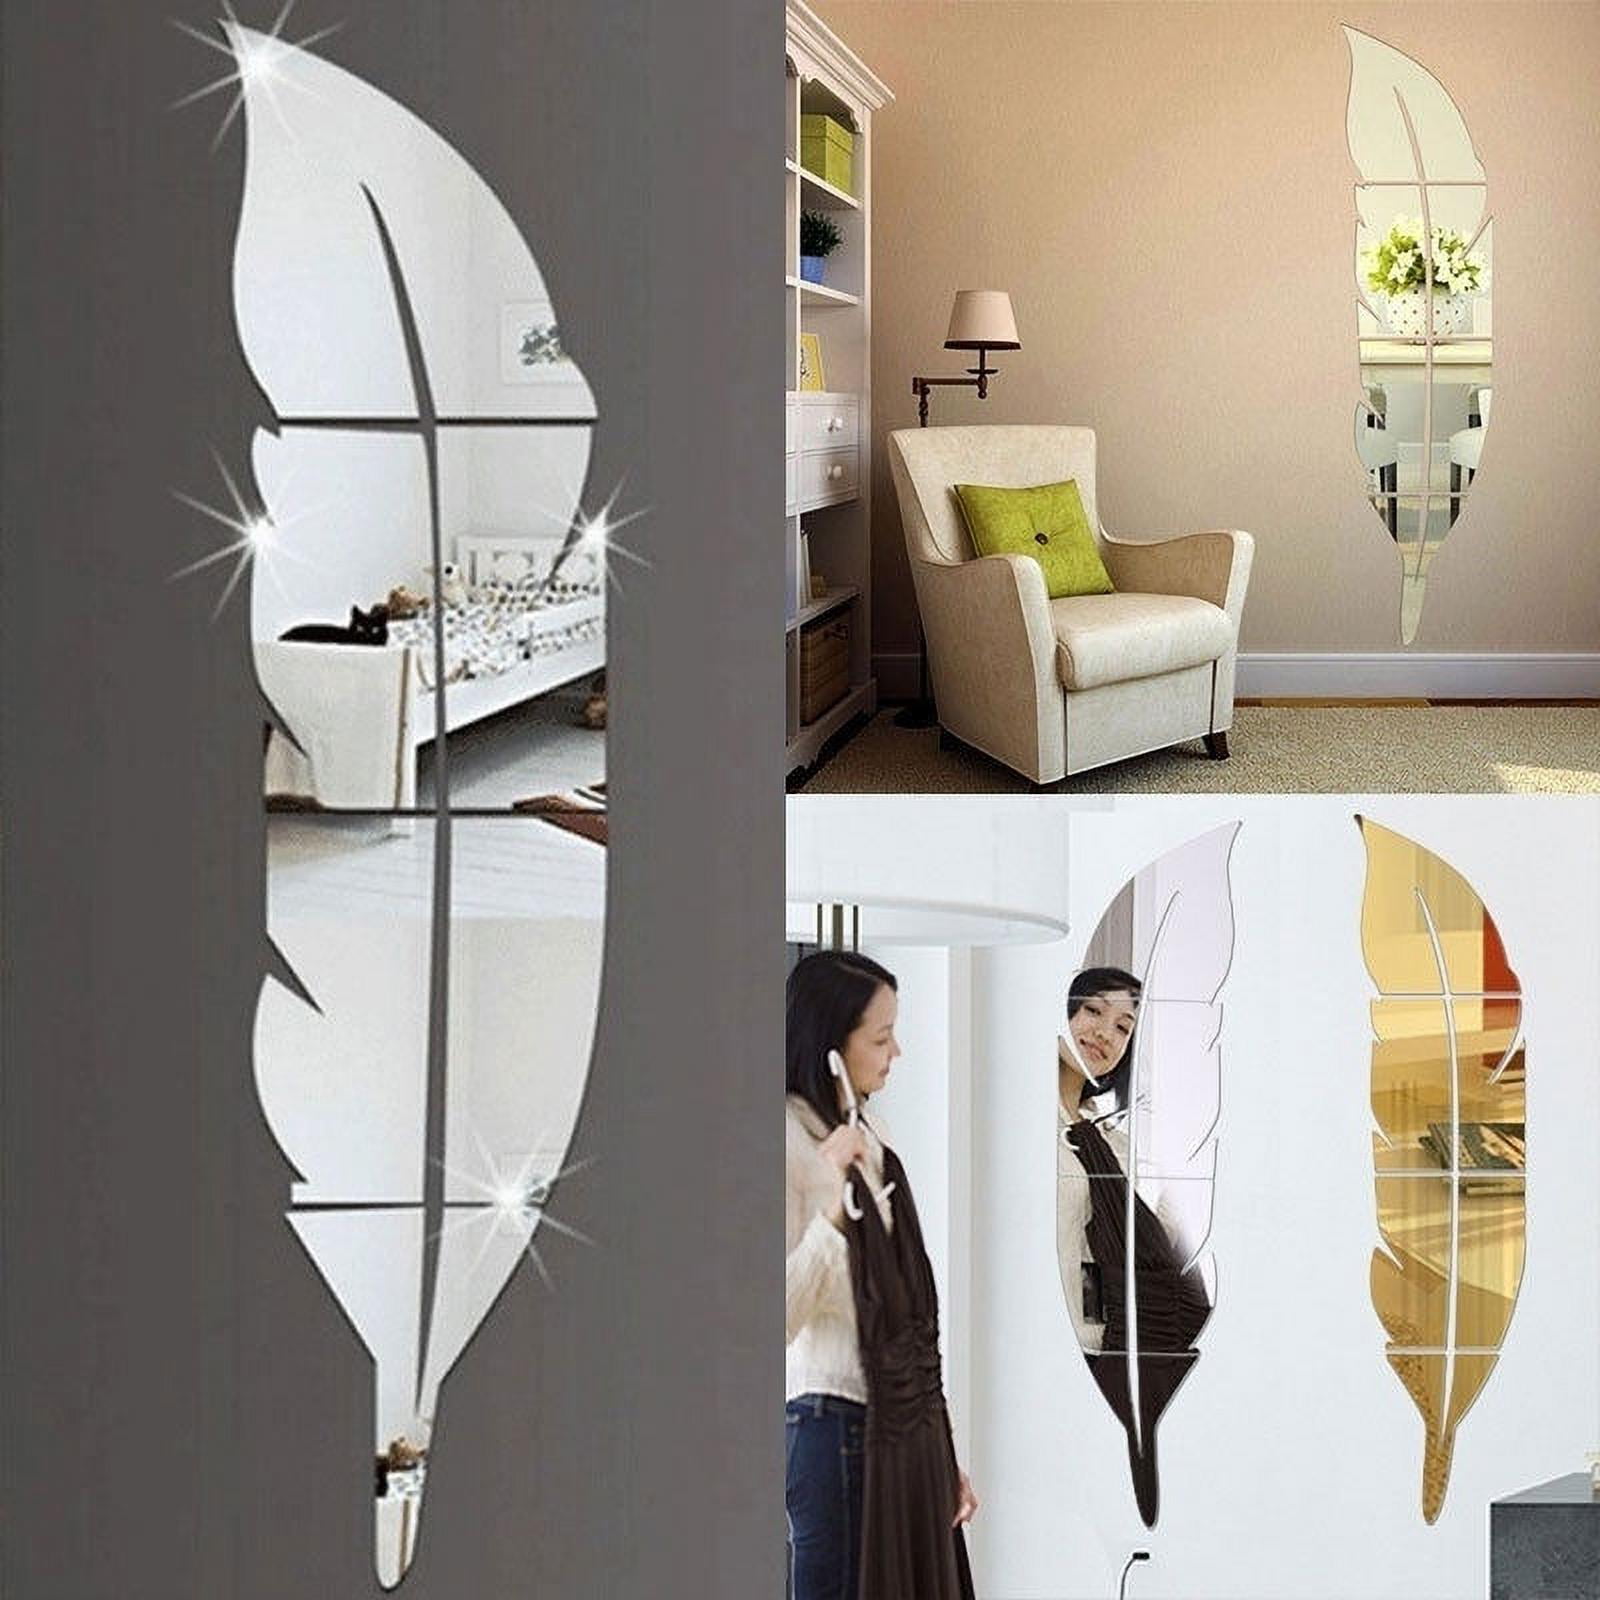 Removable Mirror Tiles Wall Sticker Modern Decal Art Mural Home Room DIY Decor